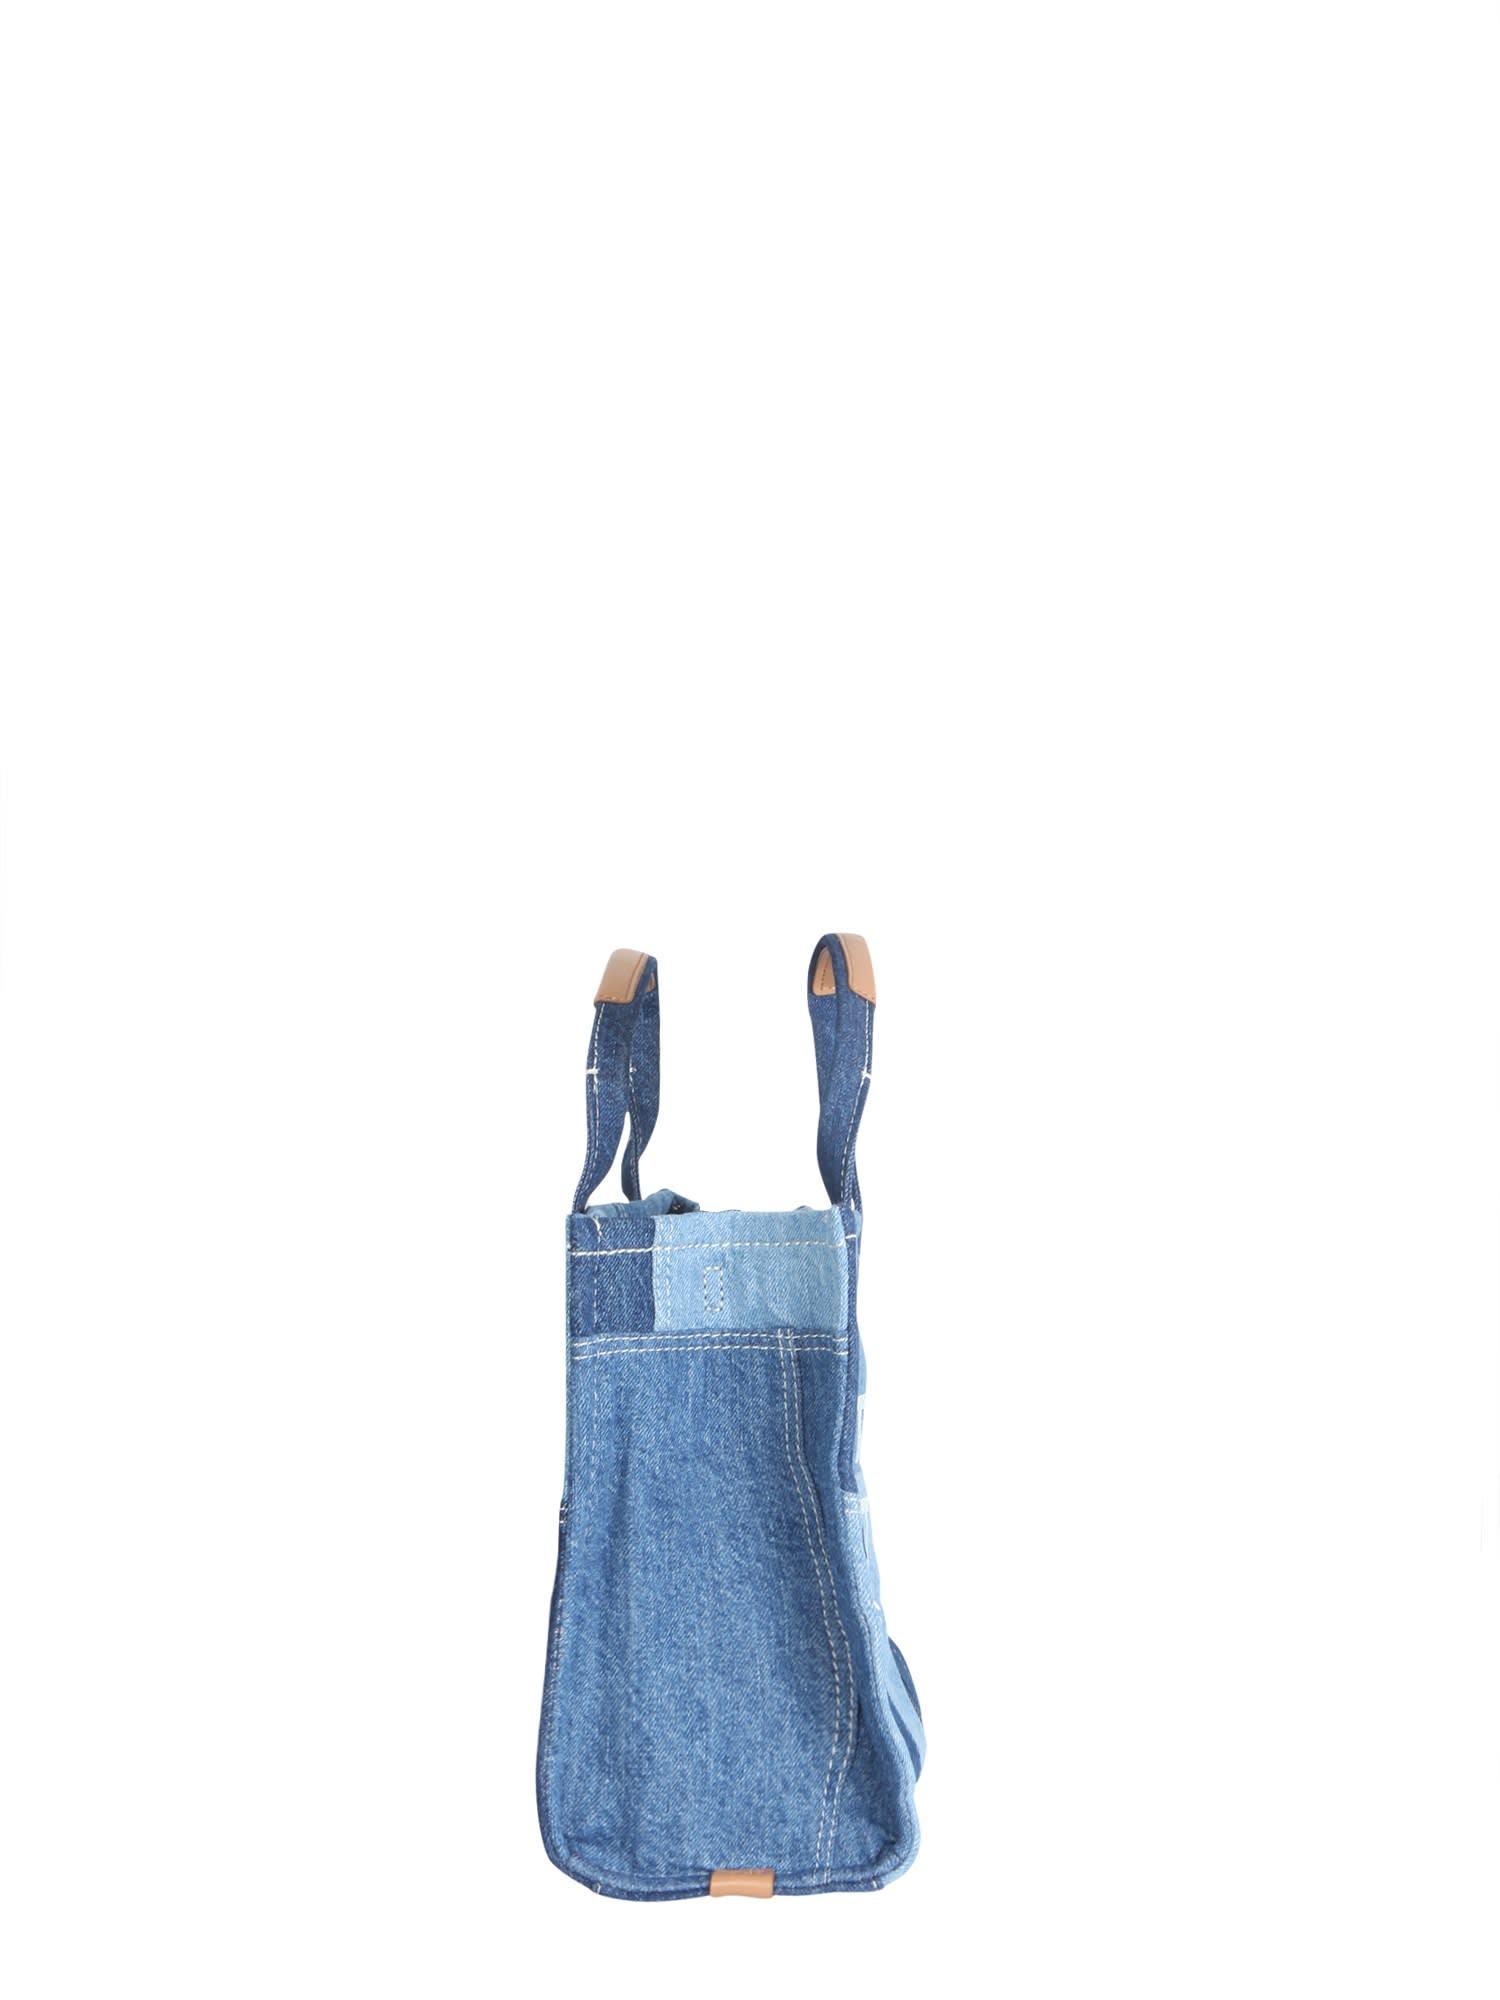 Denim Tote Bag - Denim blue/washed - Ladies